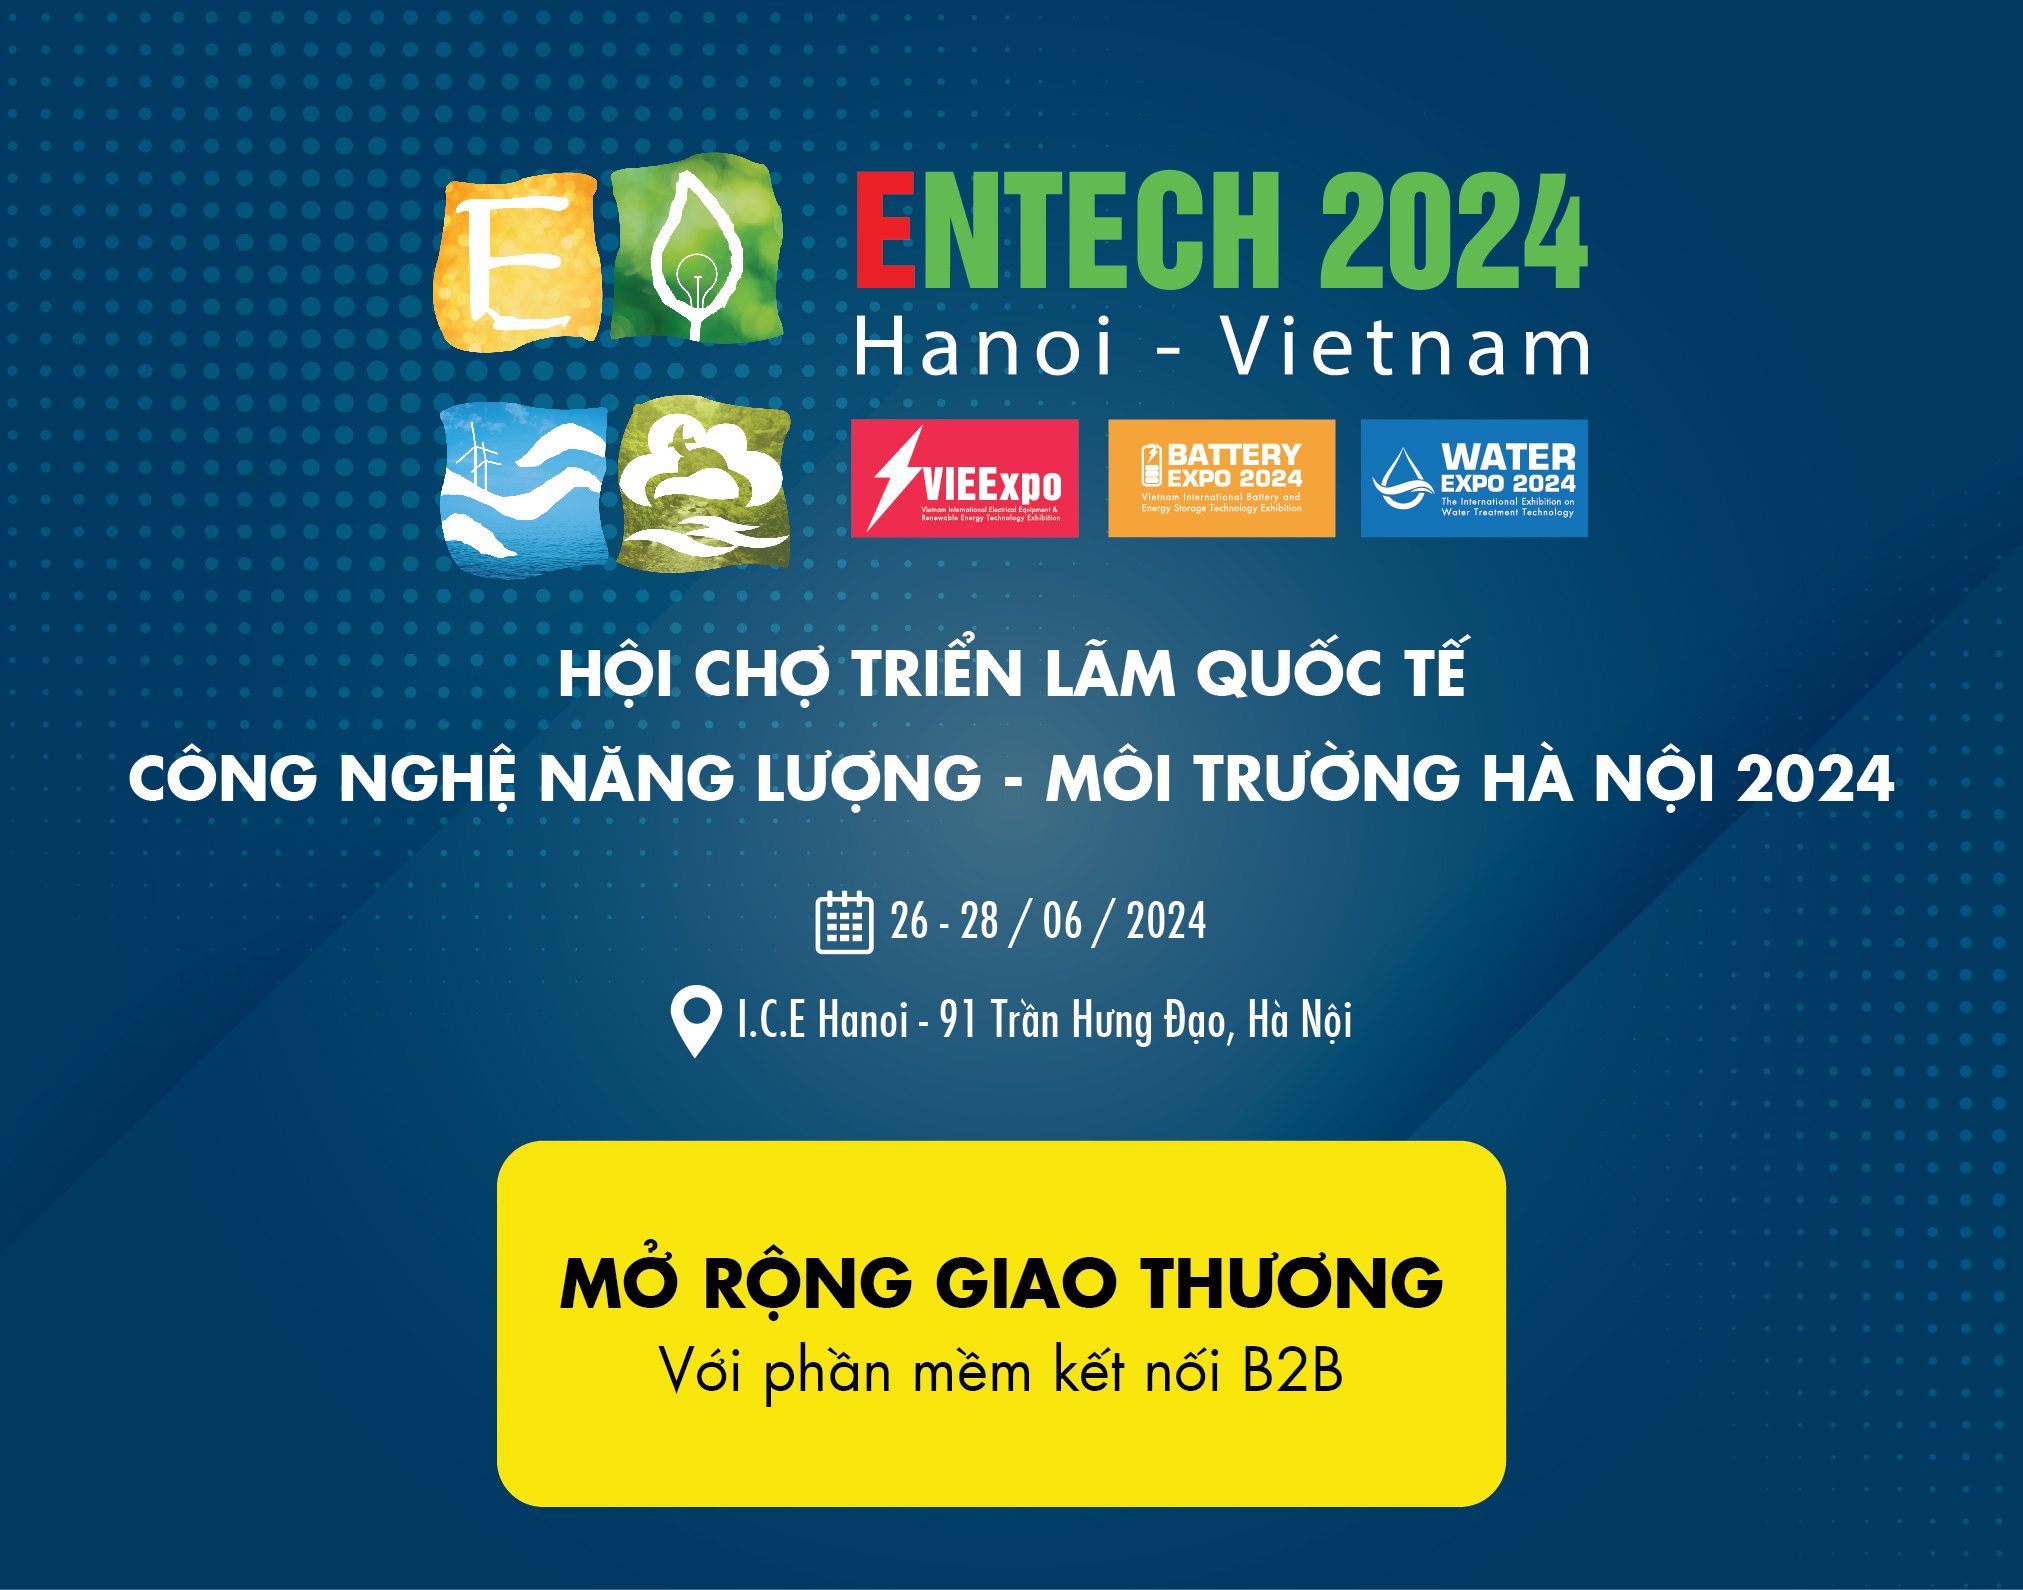 ENTECH 2024, Hanoi-Vietnam